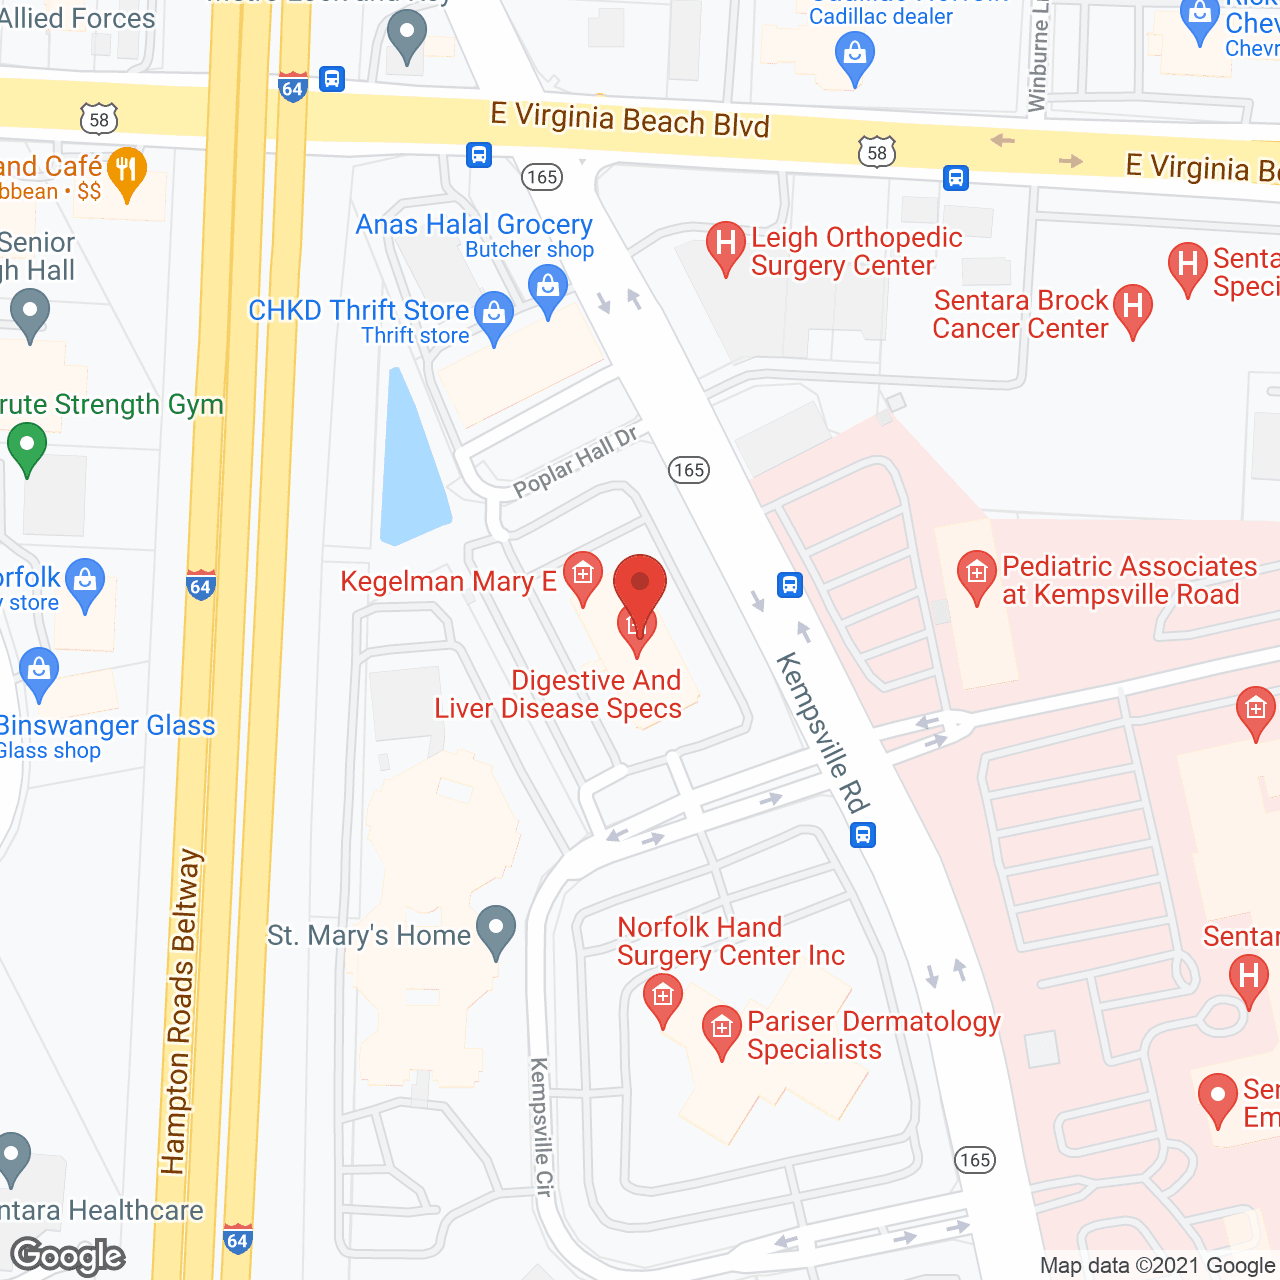 ResCare in google map